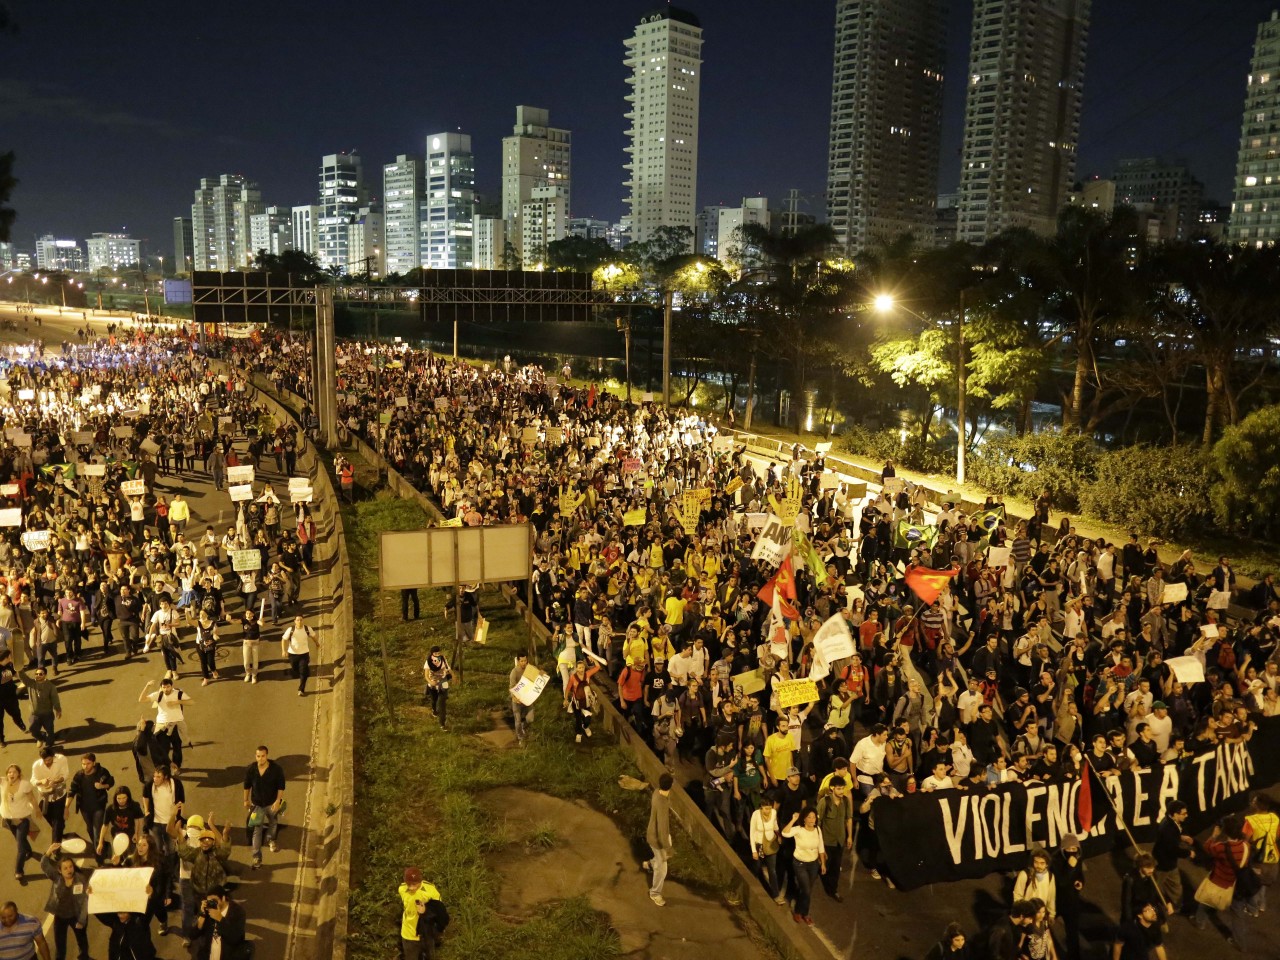 Brazilians accuse police of harsh crowd tactics